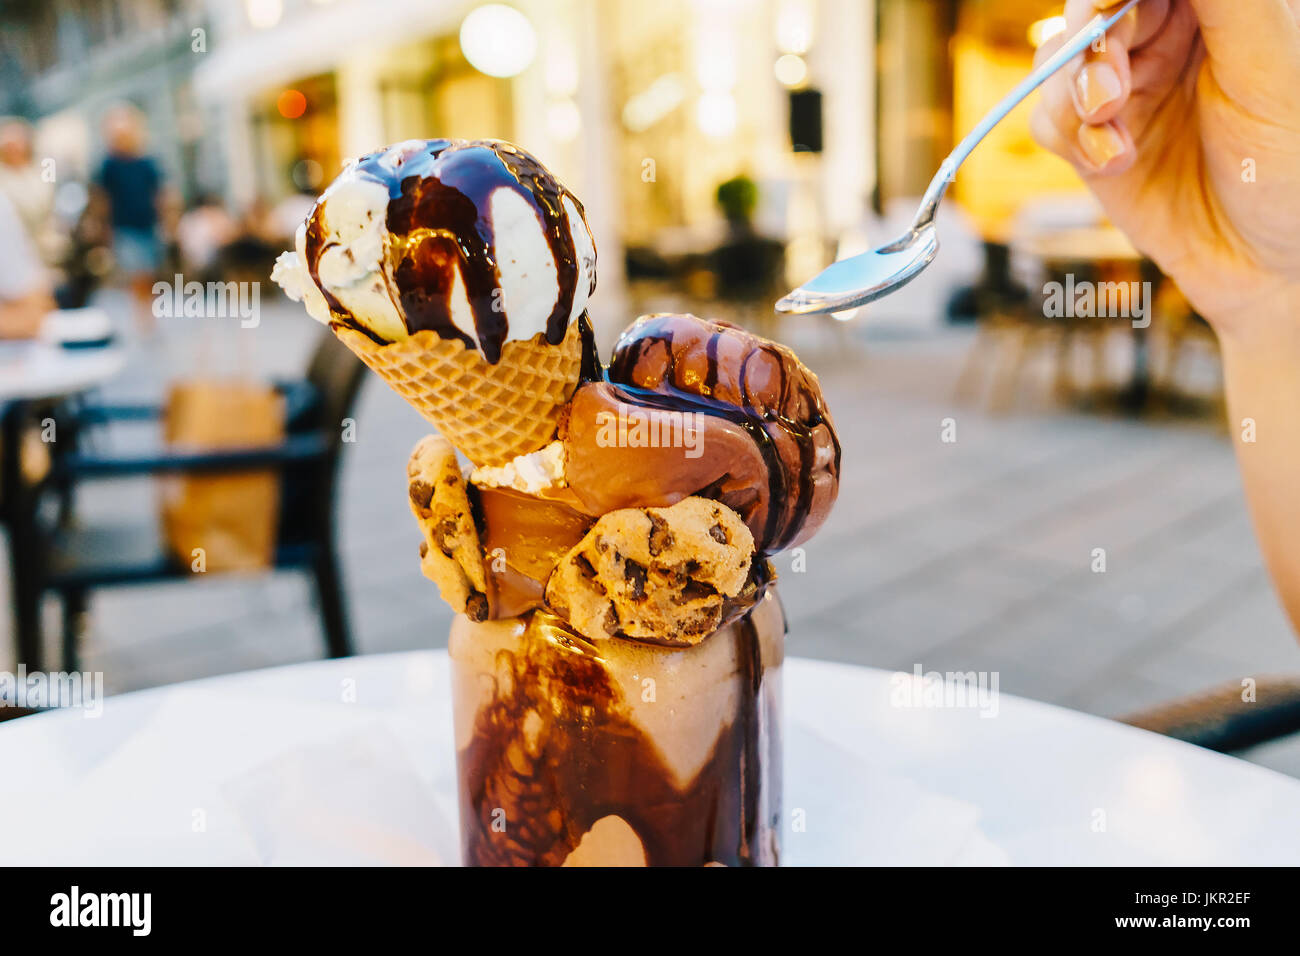 Delicious Ice Cream Eating At Restaurant Stock Photo